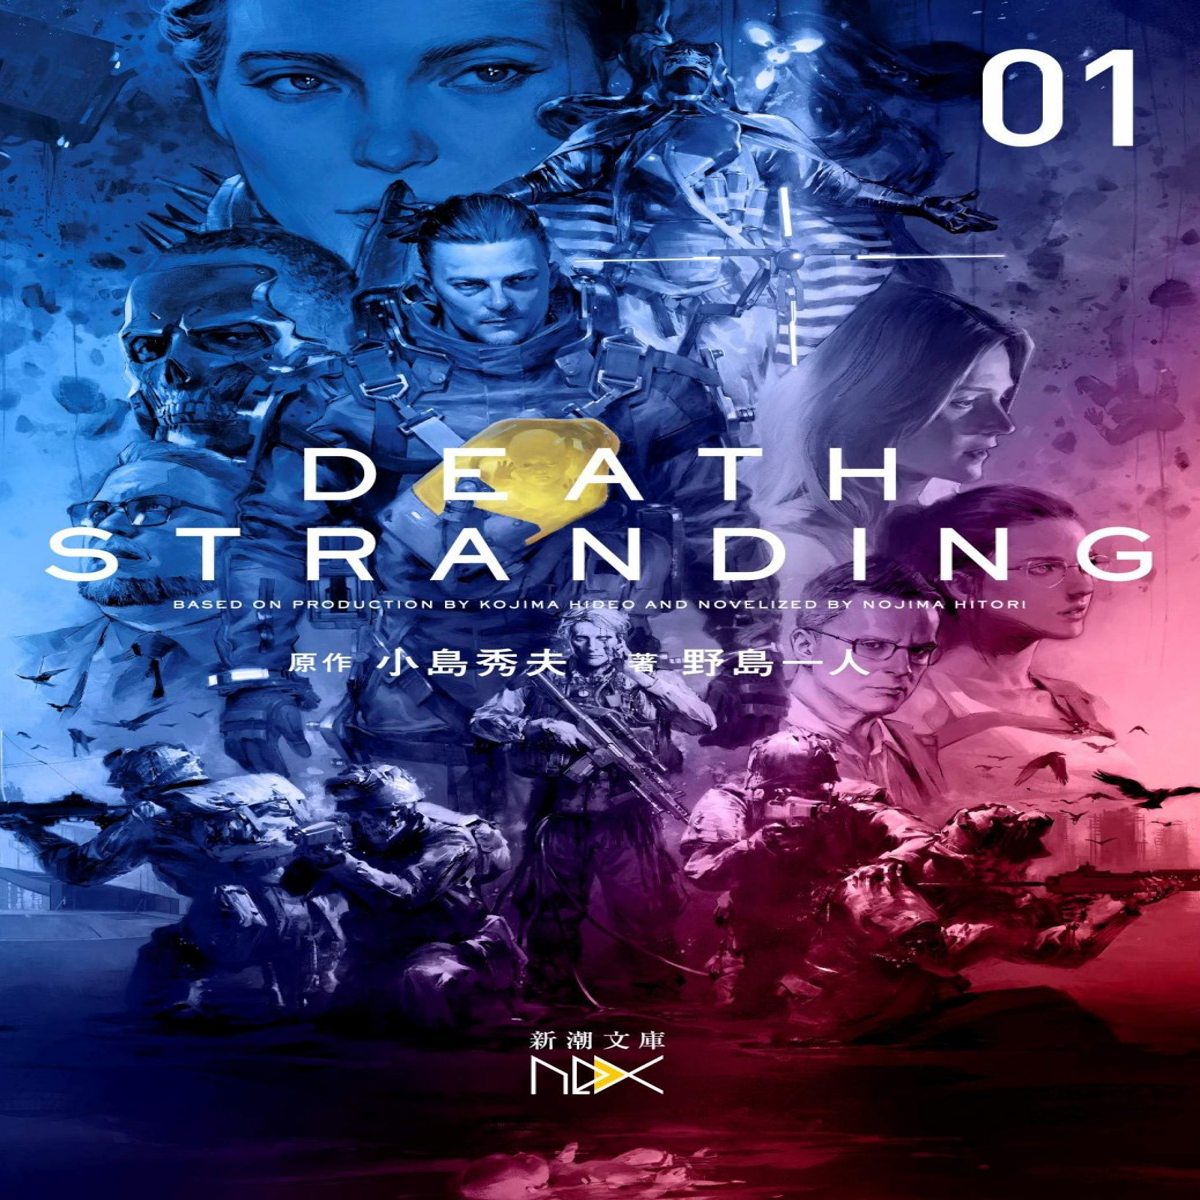 Death Stranding movie announced, with Hideo Kojima producing - Polygon